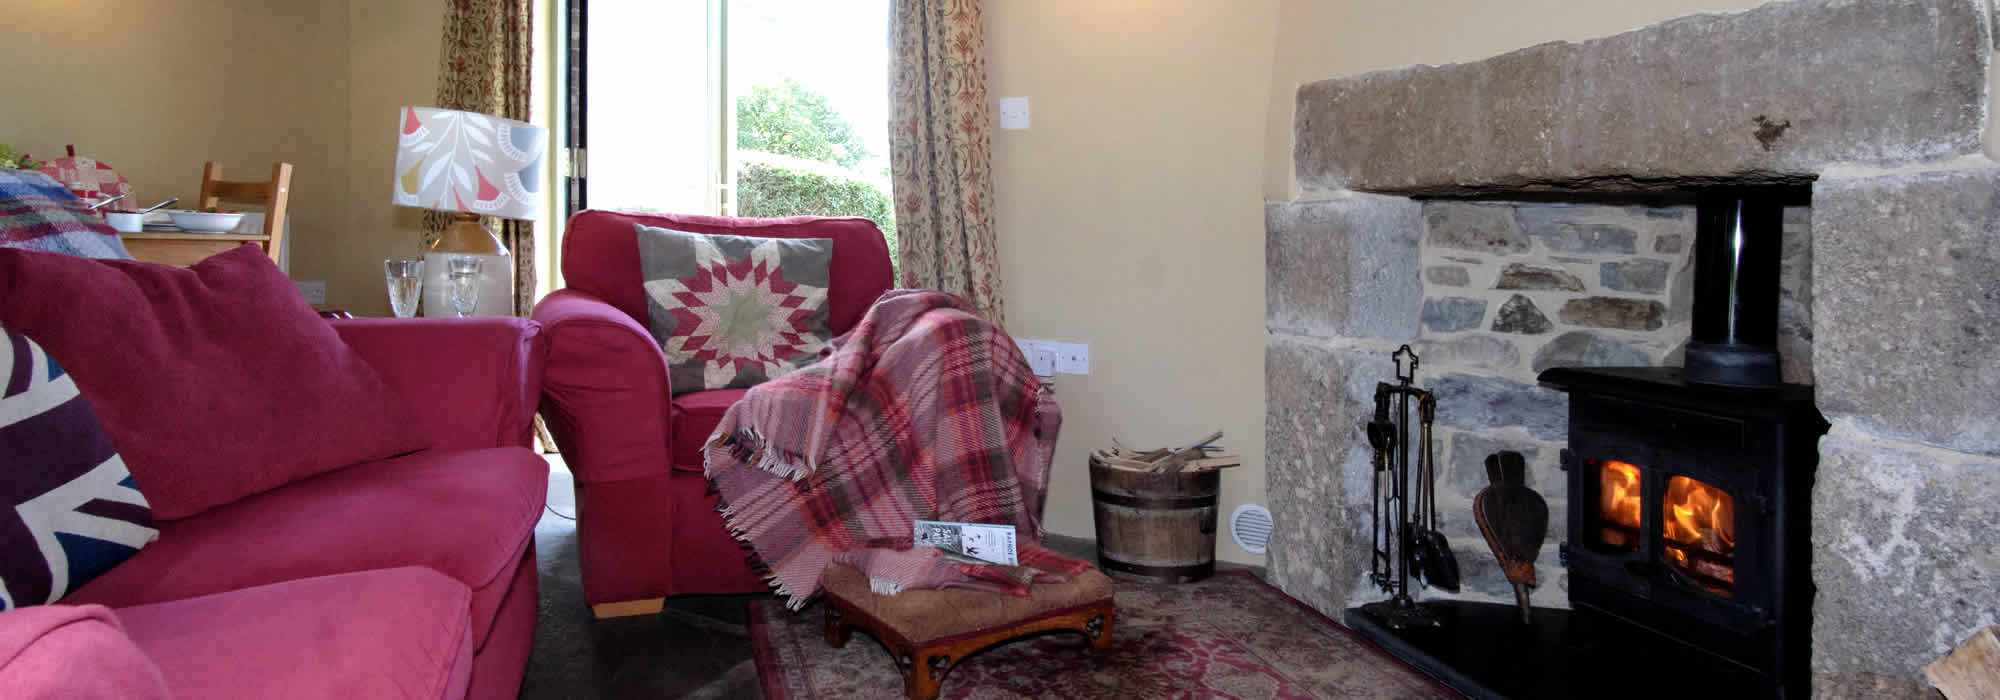 Monkstone Cottage double ensuite bedroom with views over Dartmoor